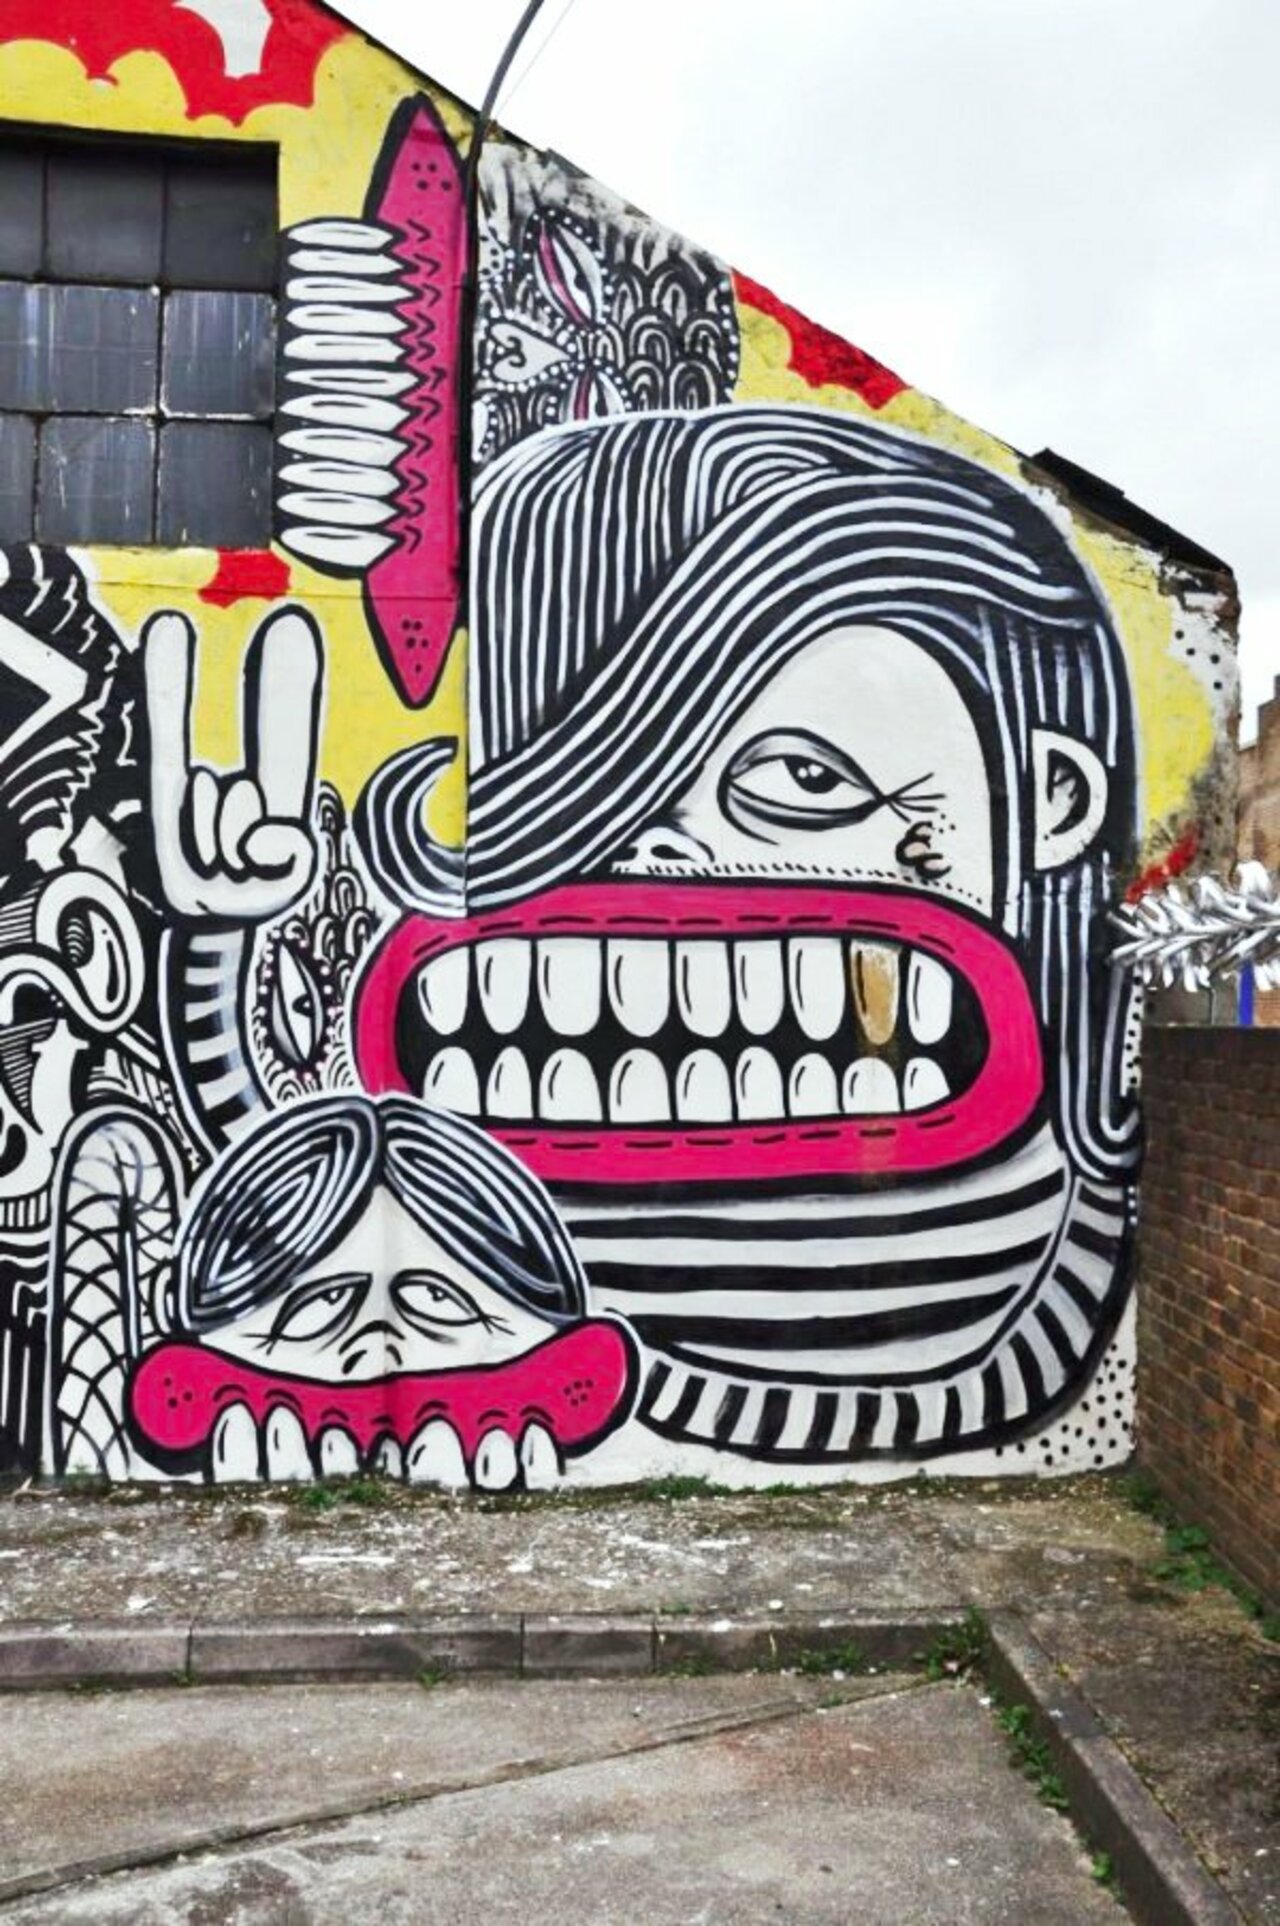 RT @Brindille_: #Streetart  #urbanart #graffiti #mural by English #artist Sweet Toof, https://t.co/kIYY3DTvrk